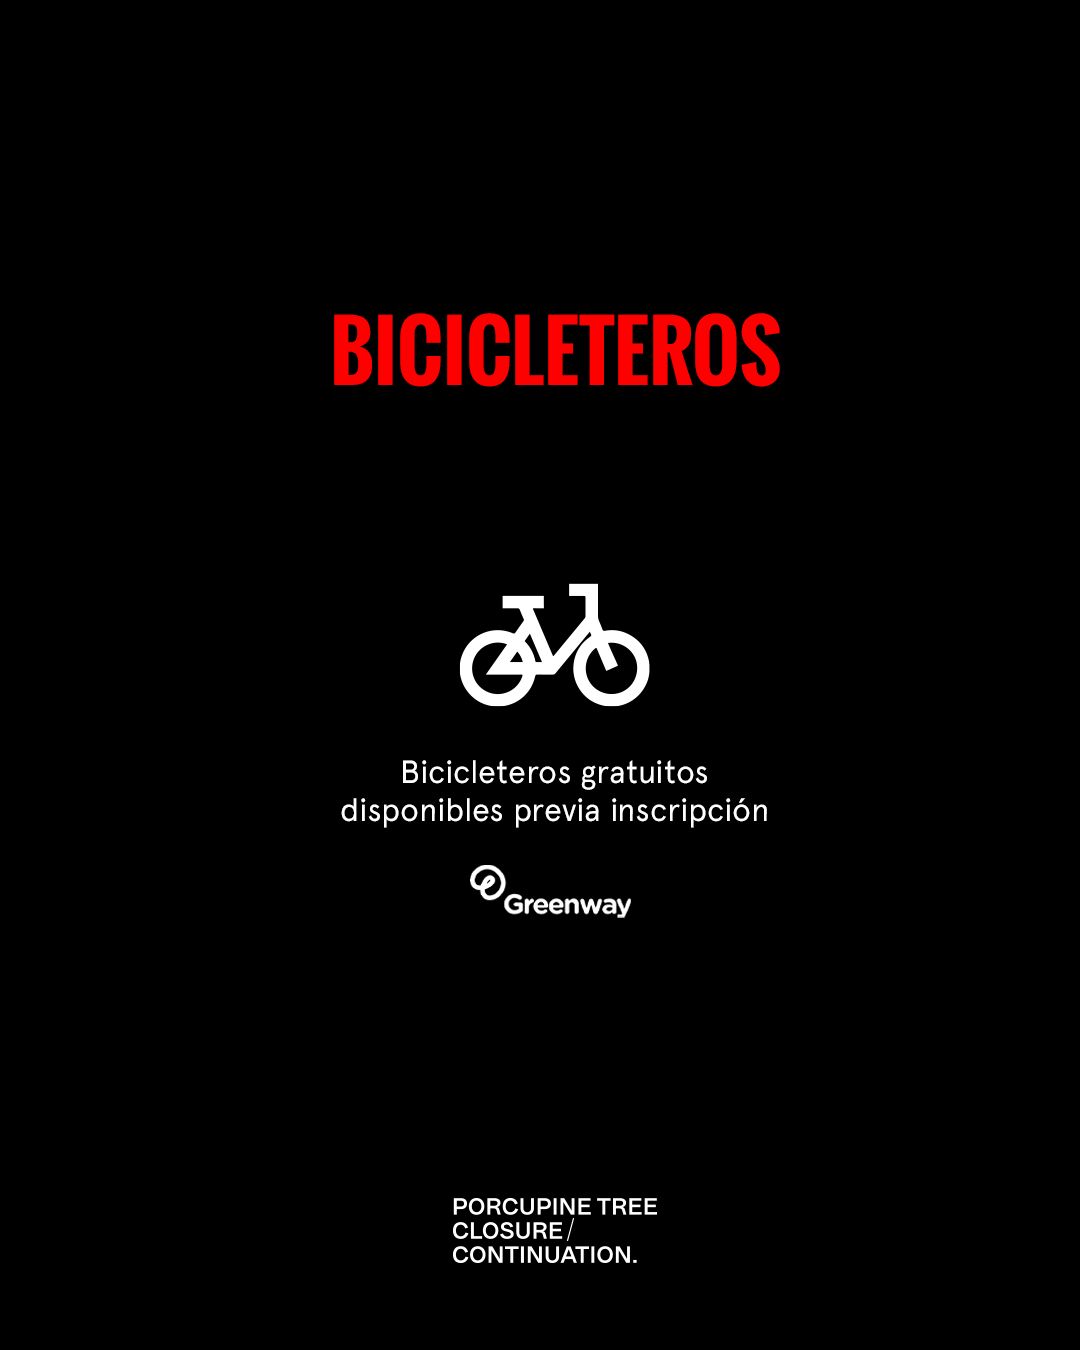 Porcupine Tree Chile 2022 Bicicleteros